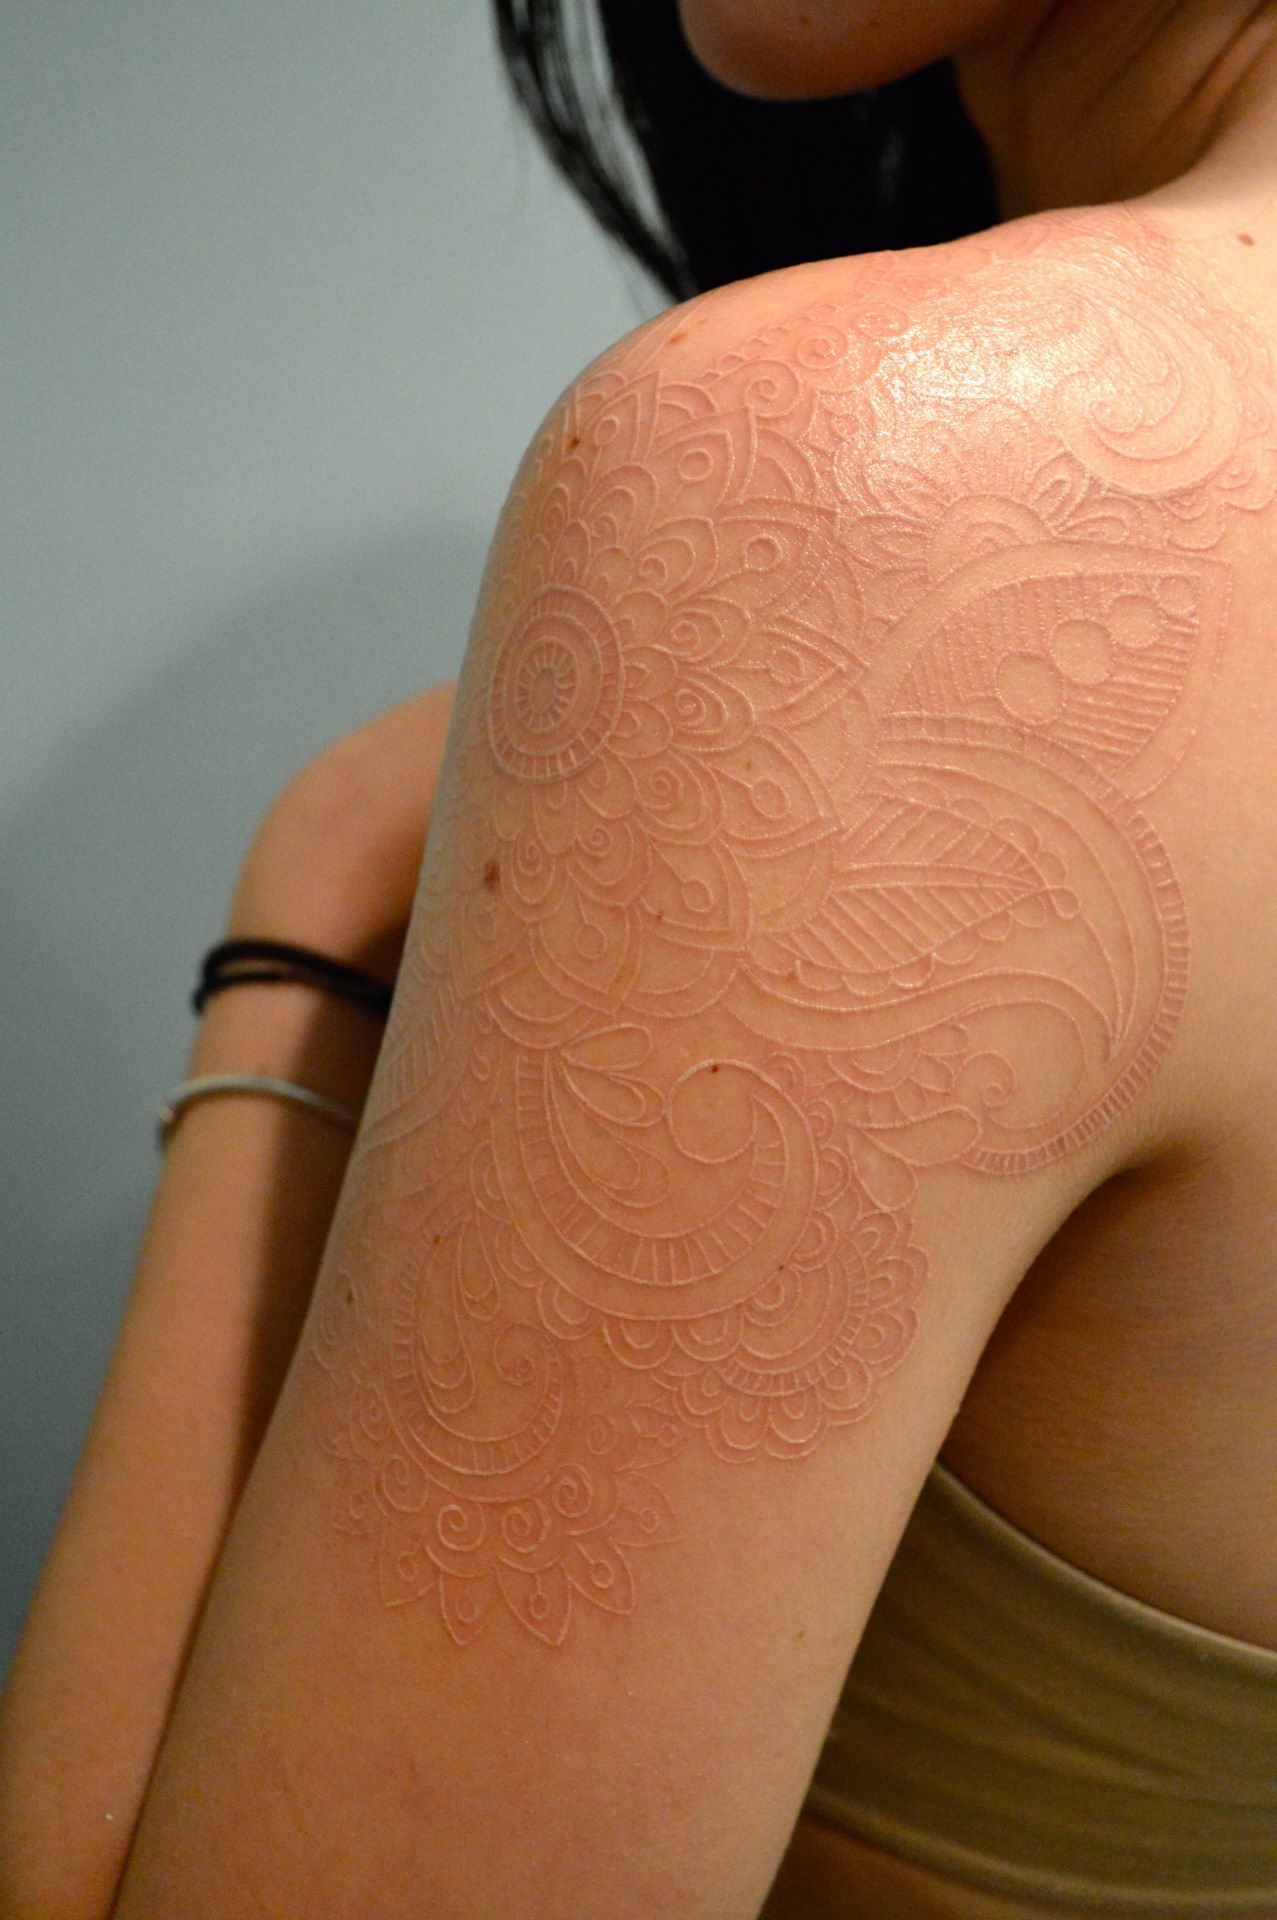 girl with elaborate scar tattoos